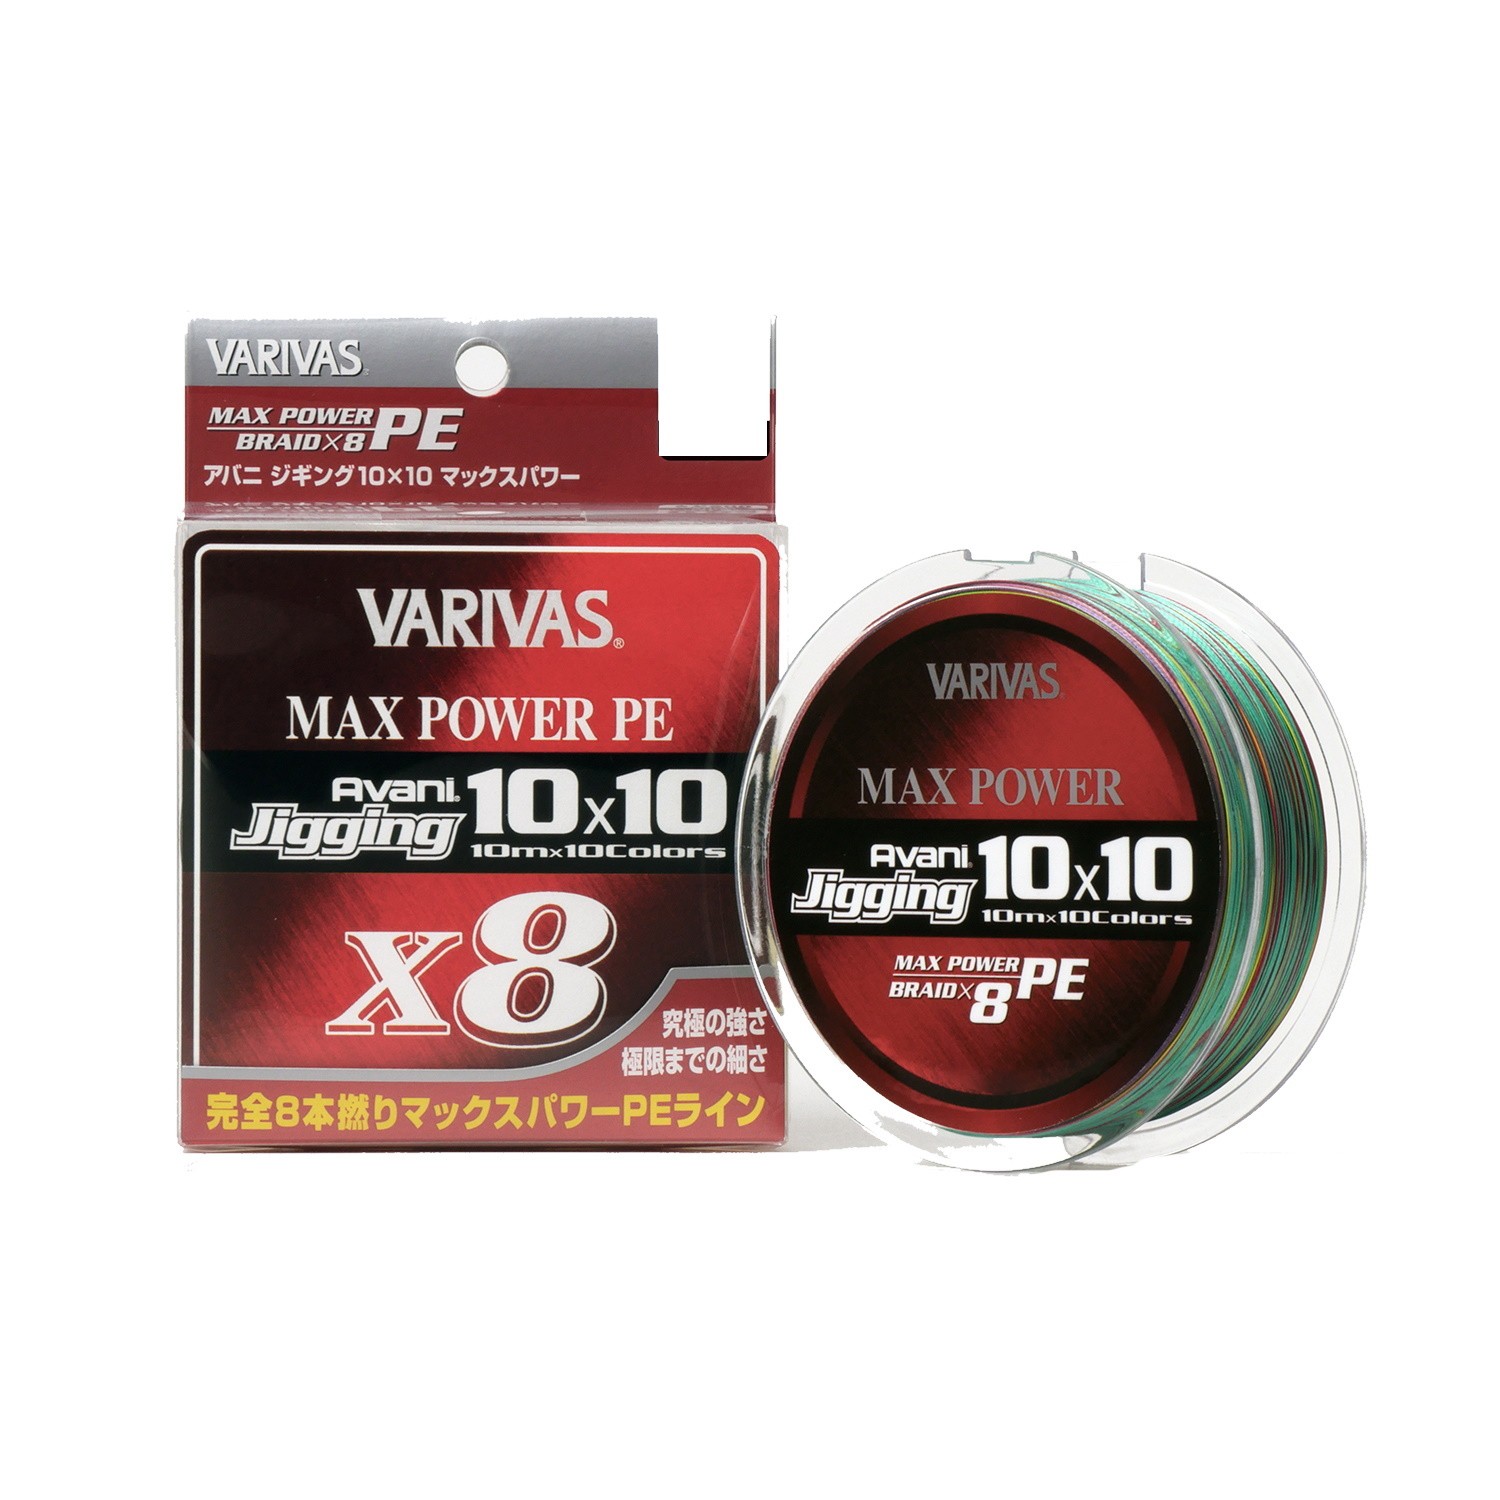 Шнур Varivas Avani Jigging 10x10 Max Power PE X8 200м PE 0.8